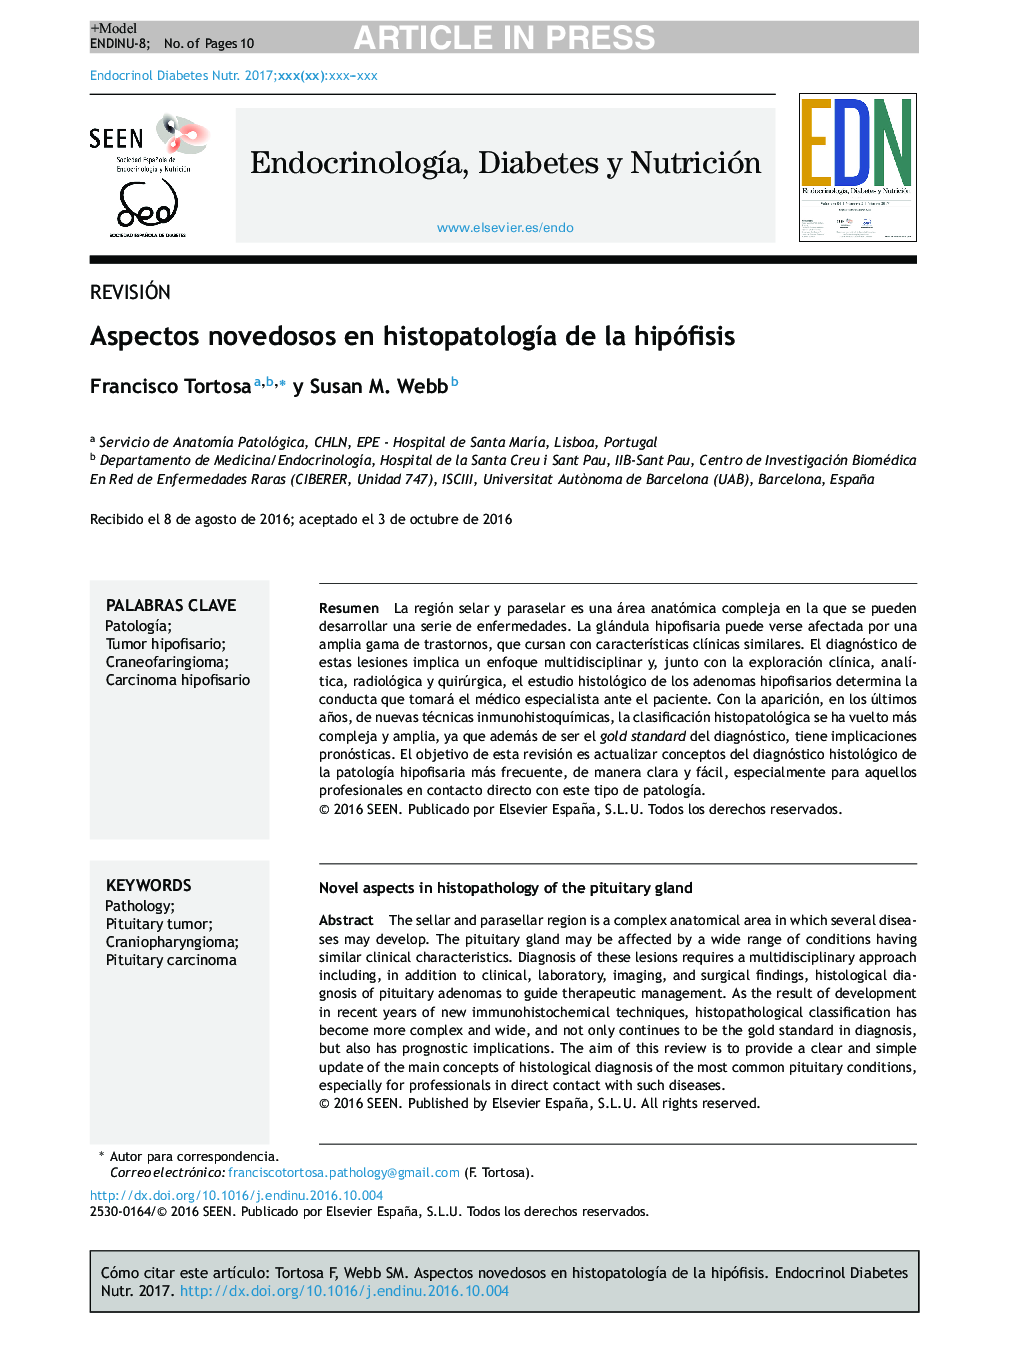 Aspectos novedosos en histopatologÃ­a de la hipófisis